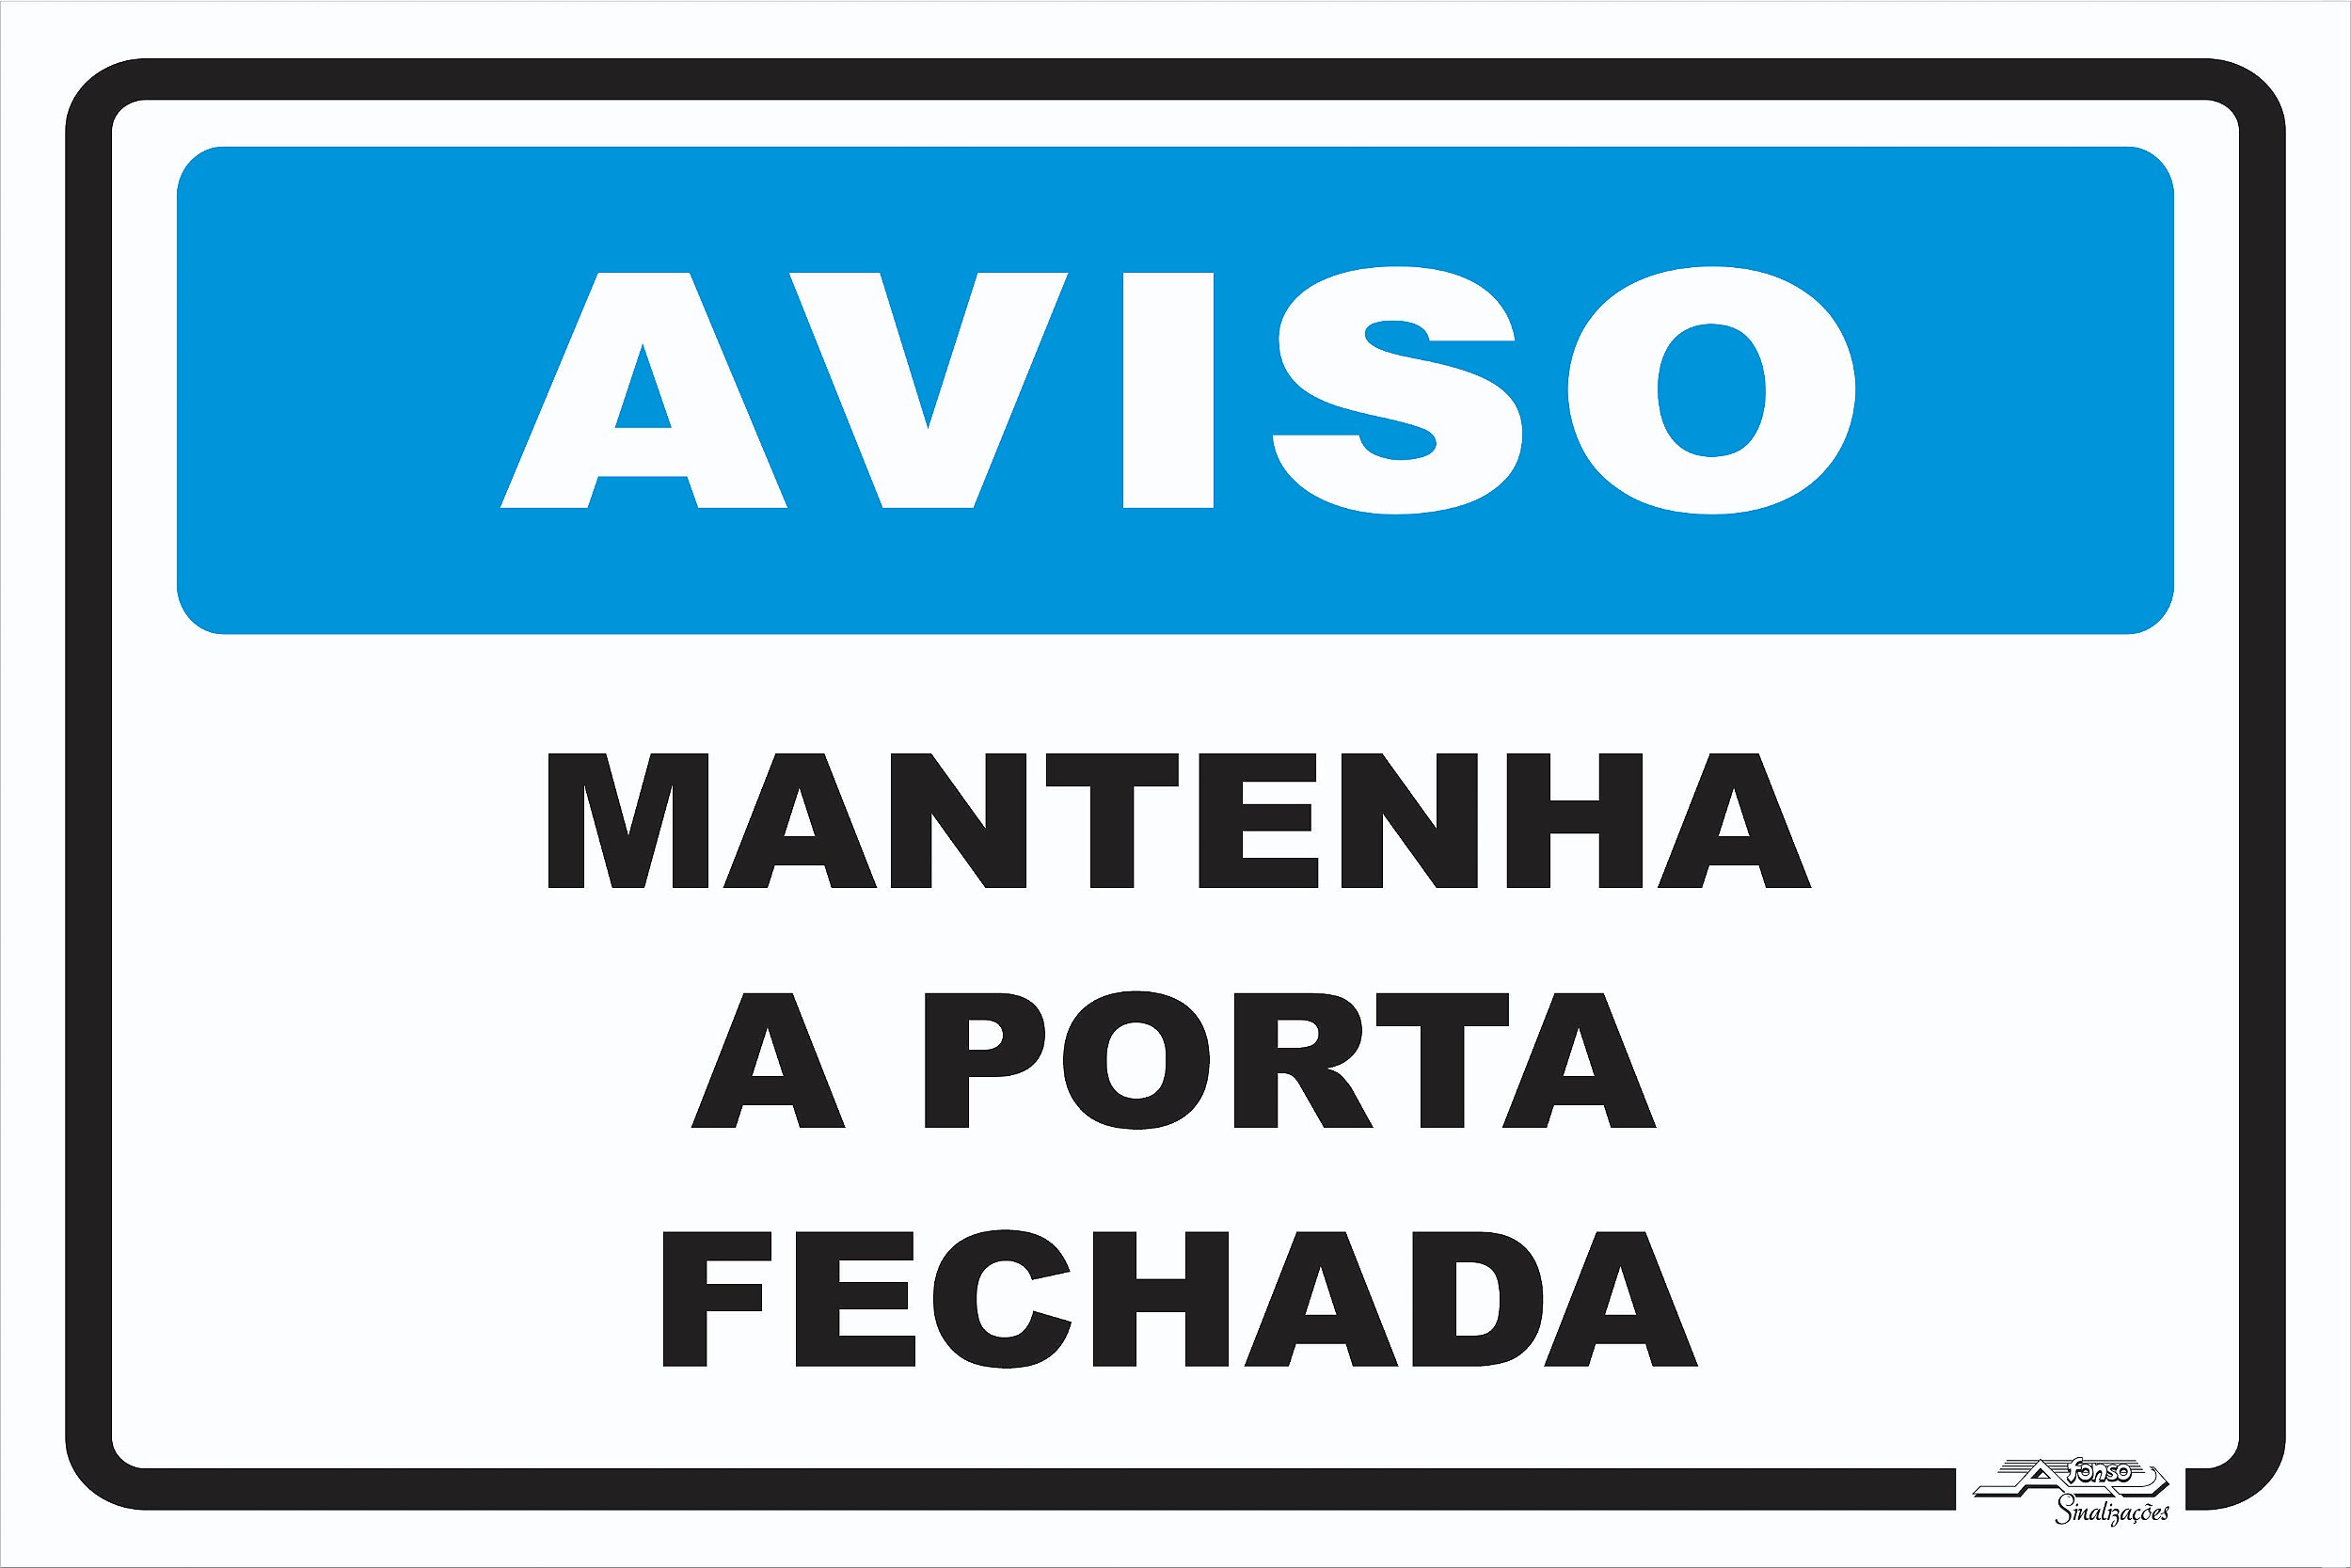 Placa Aviso Mantenha a Porta Fechada - Afonso Adesivos